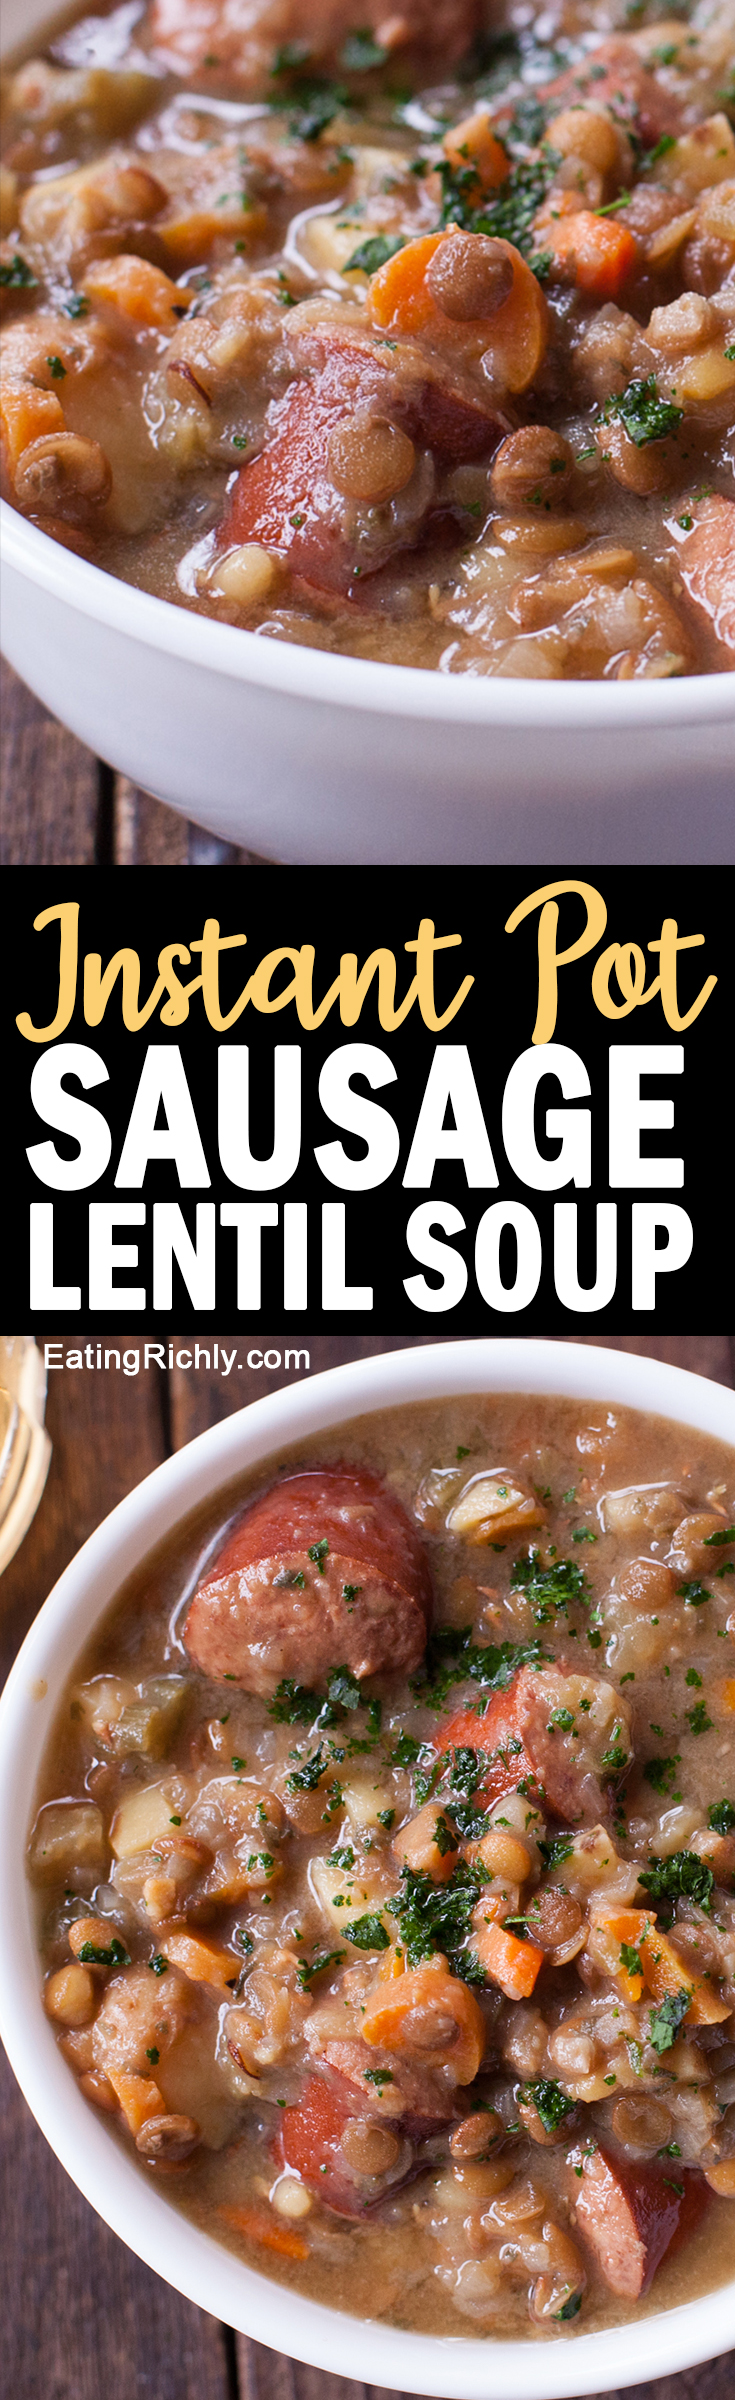 Instant Pot Lentil Soup Recipe with Sausage and Veggies